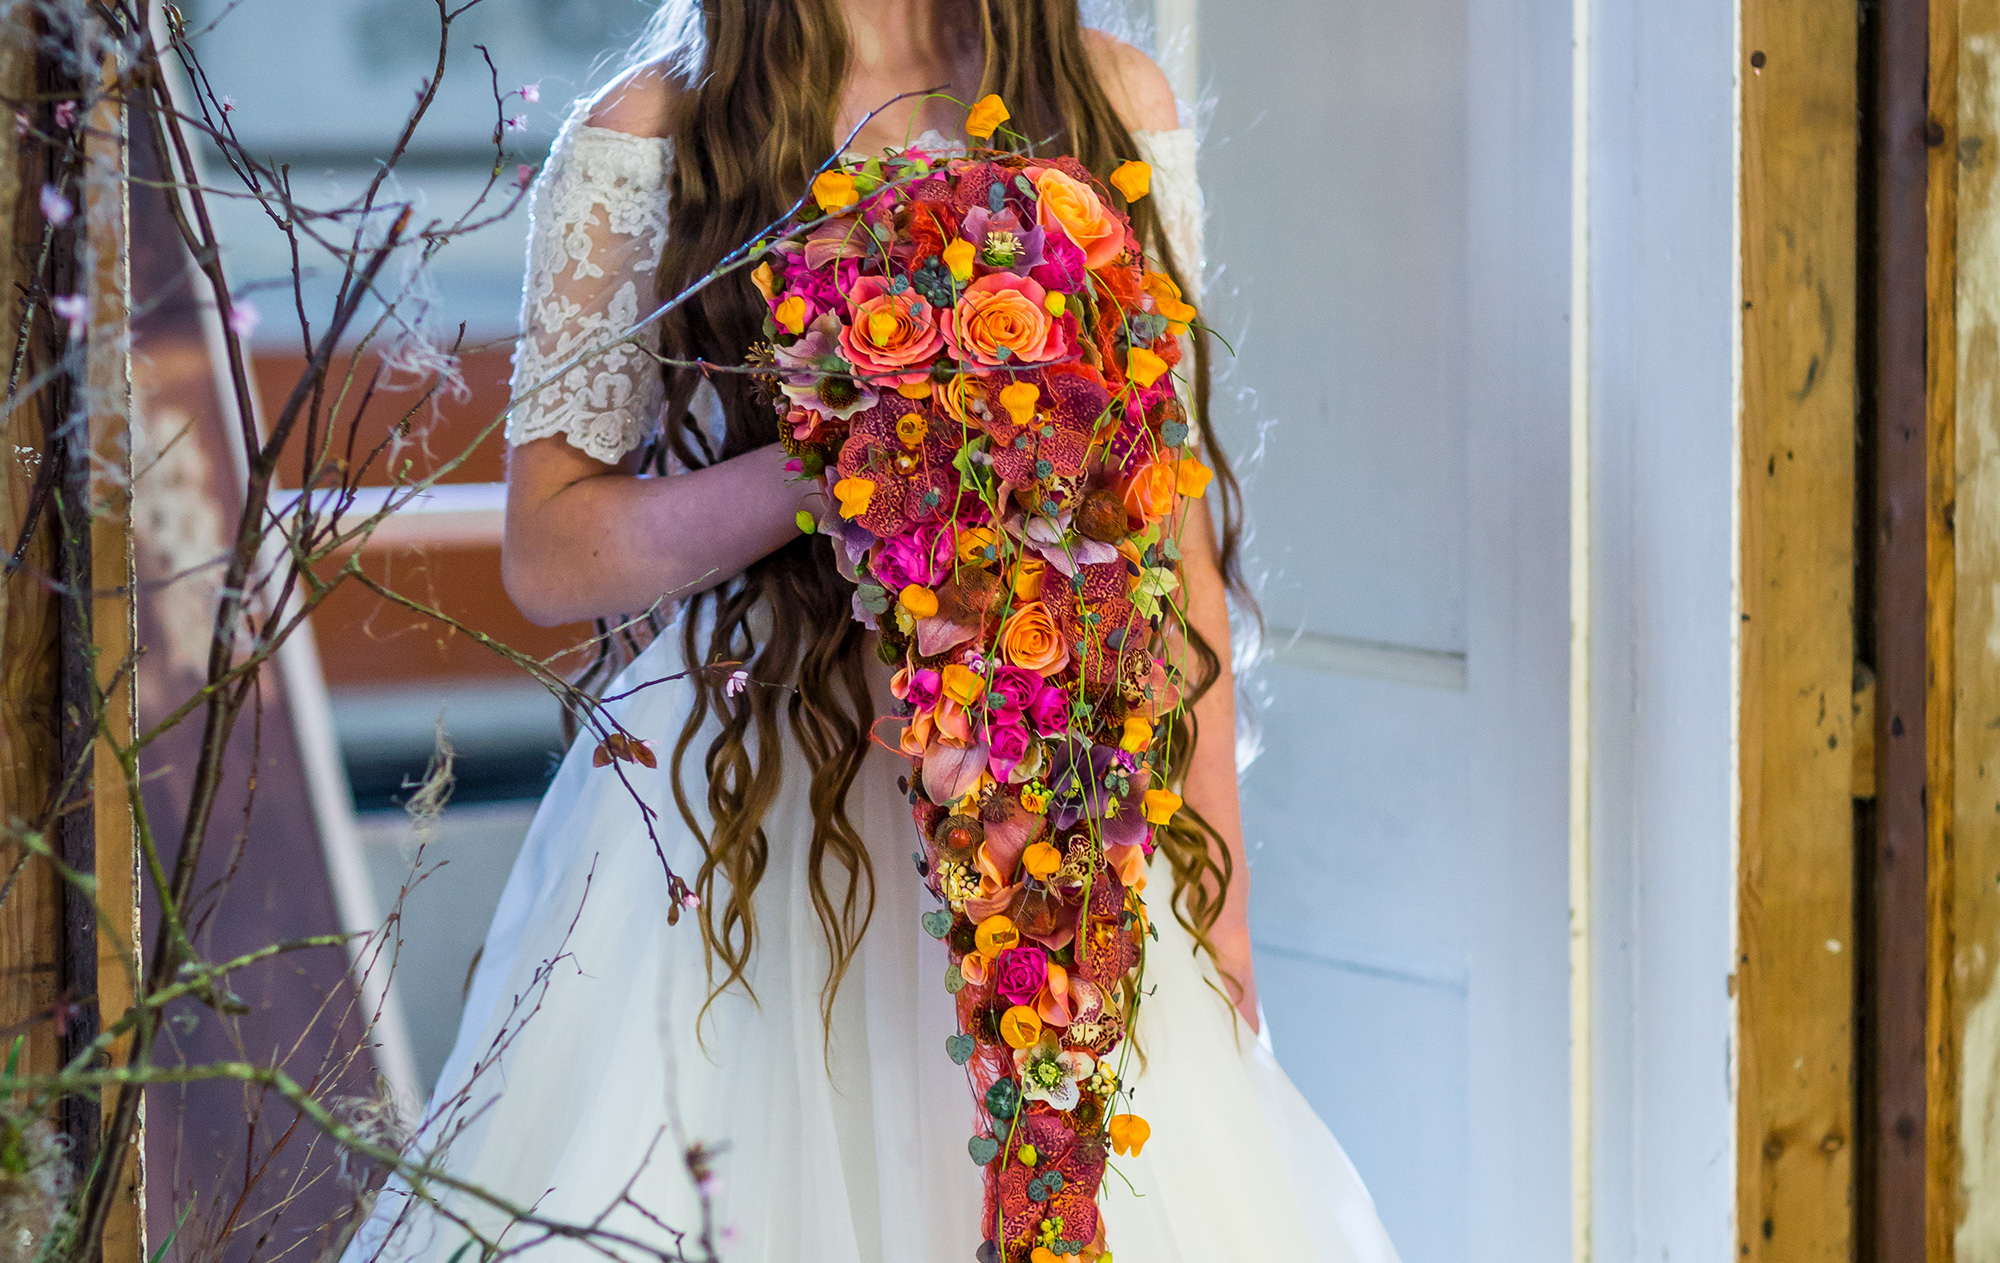 Preserve your wedding bouquet